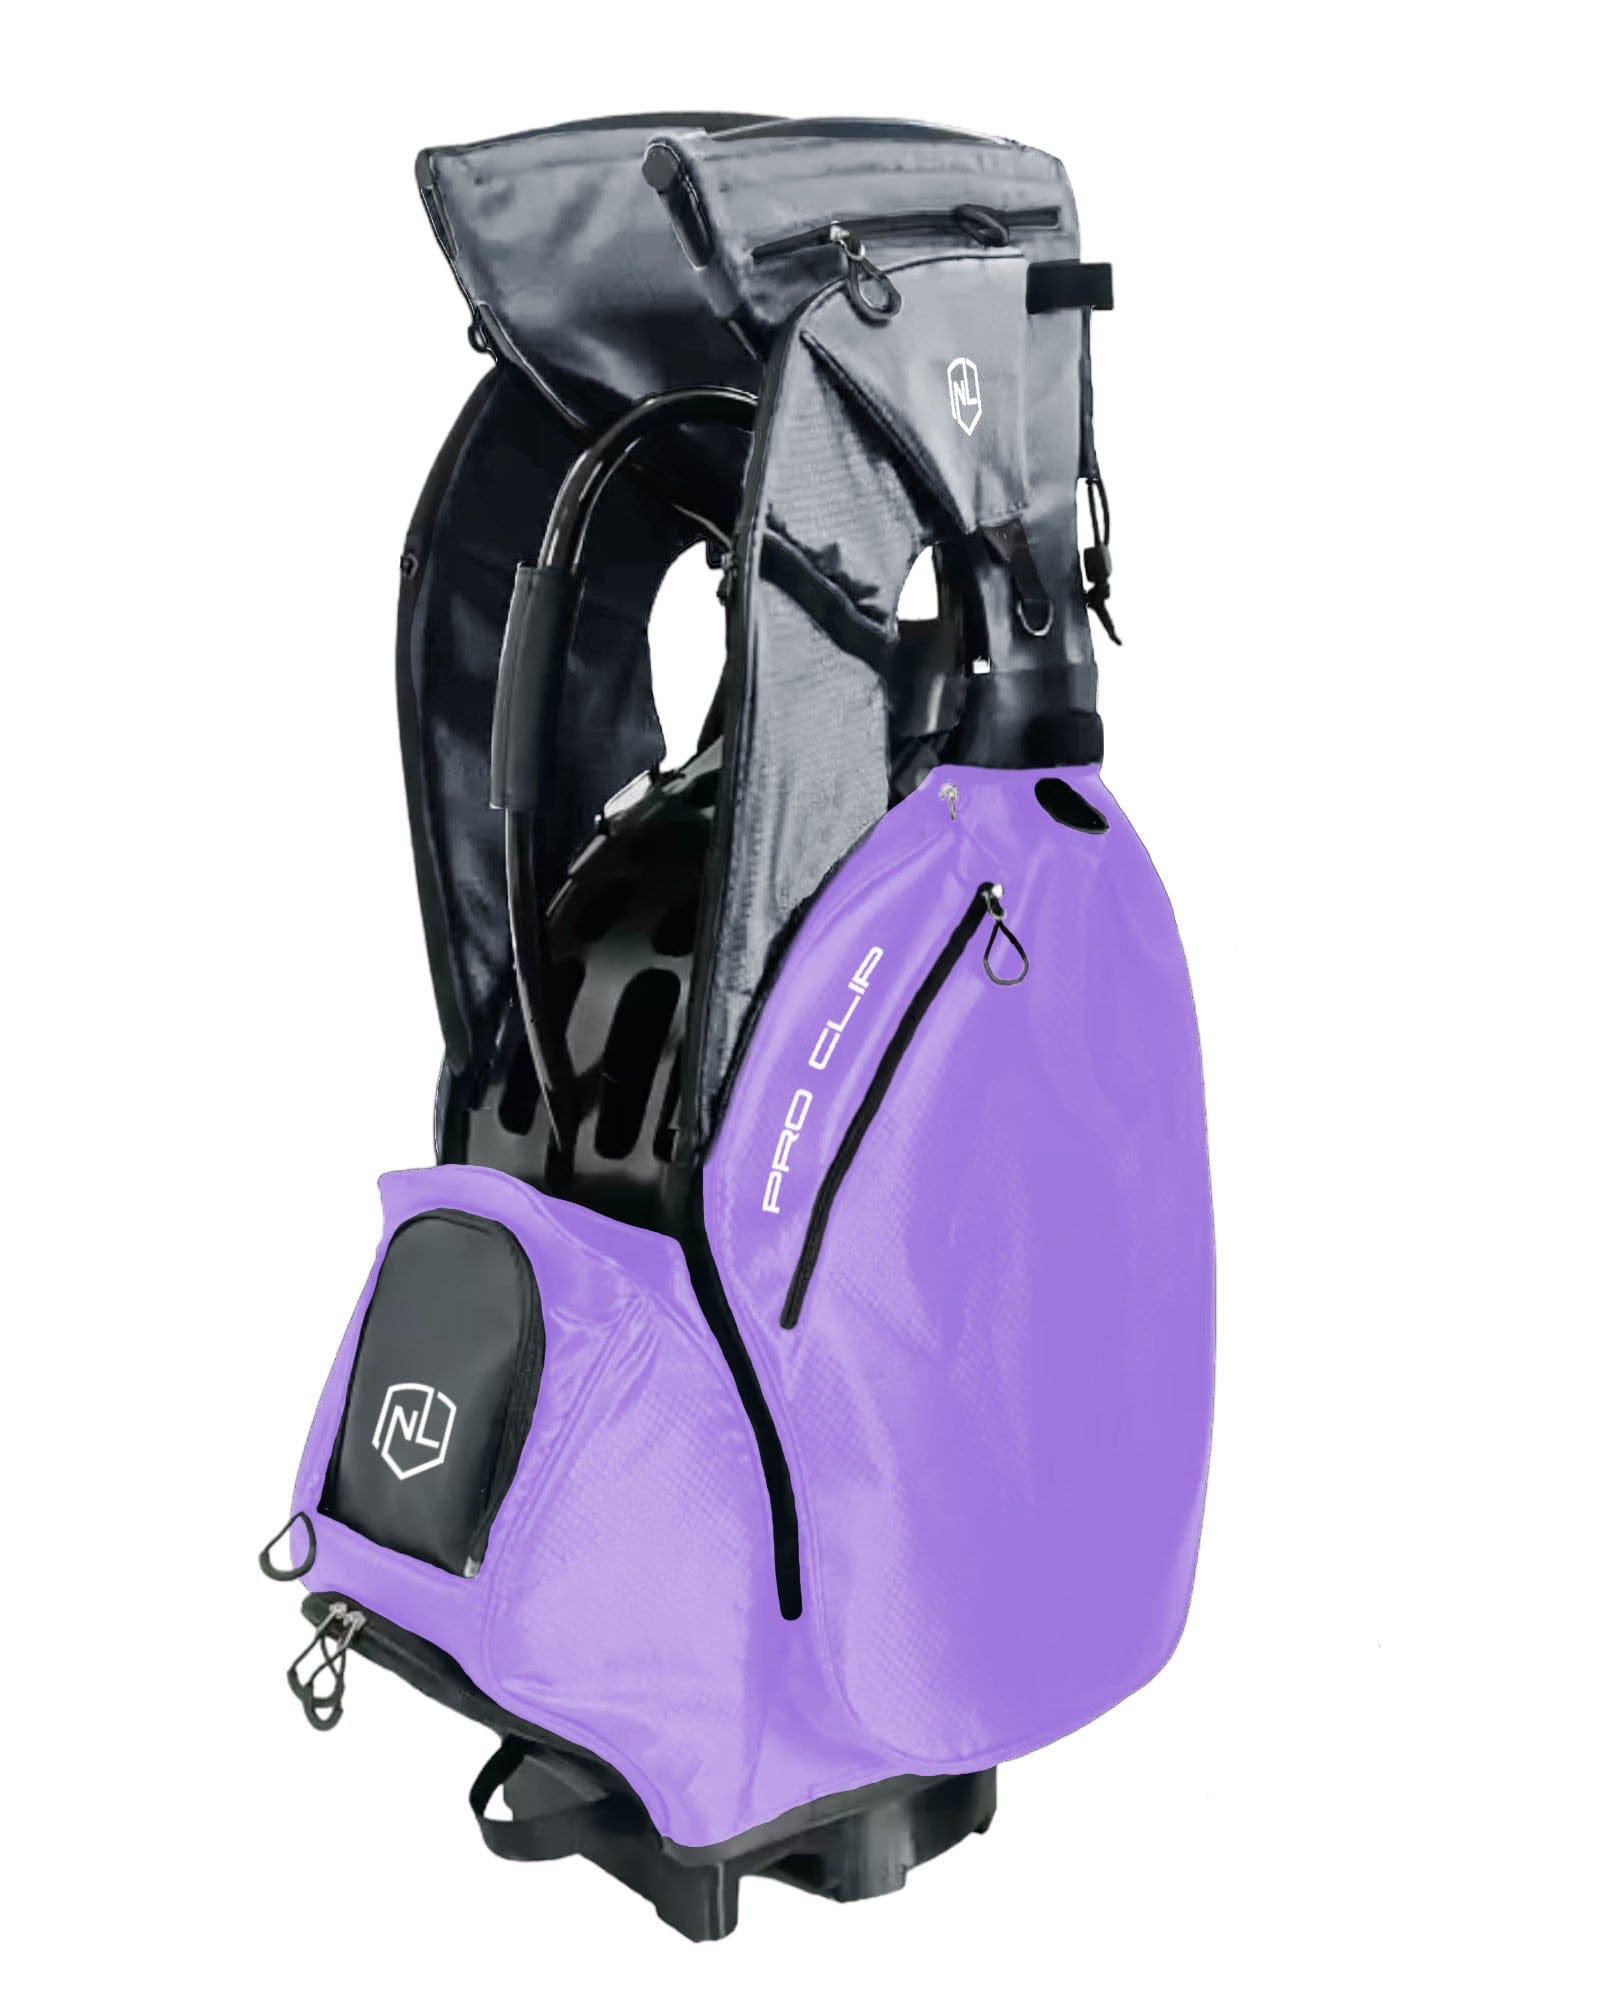 Exoskin golf bags Lavender